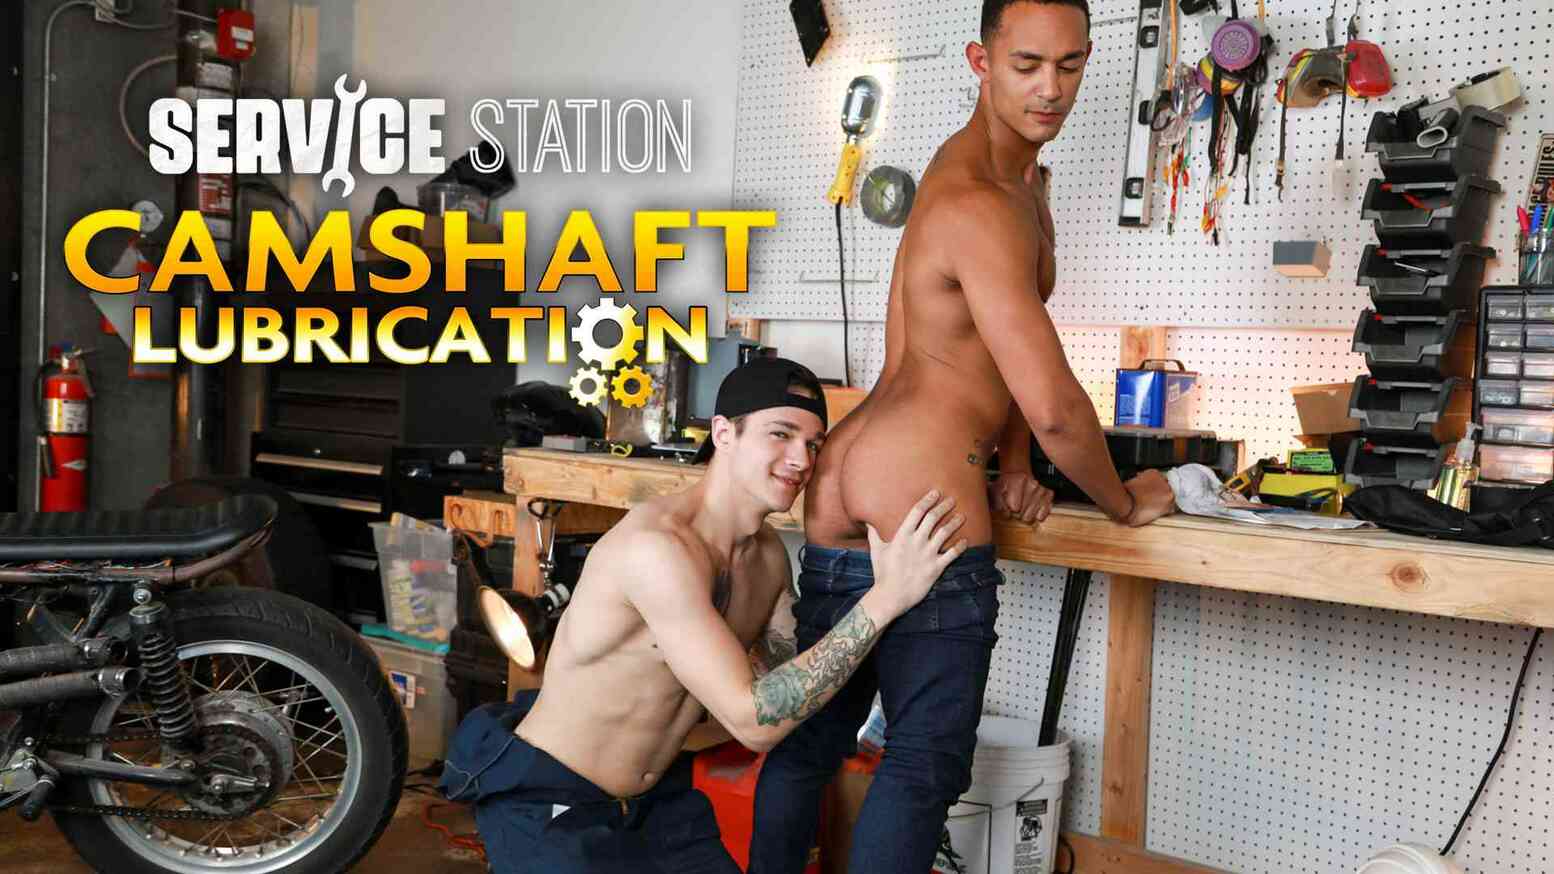 Service Station: Camshaft Lubrication